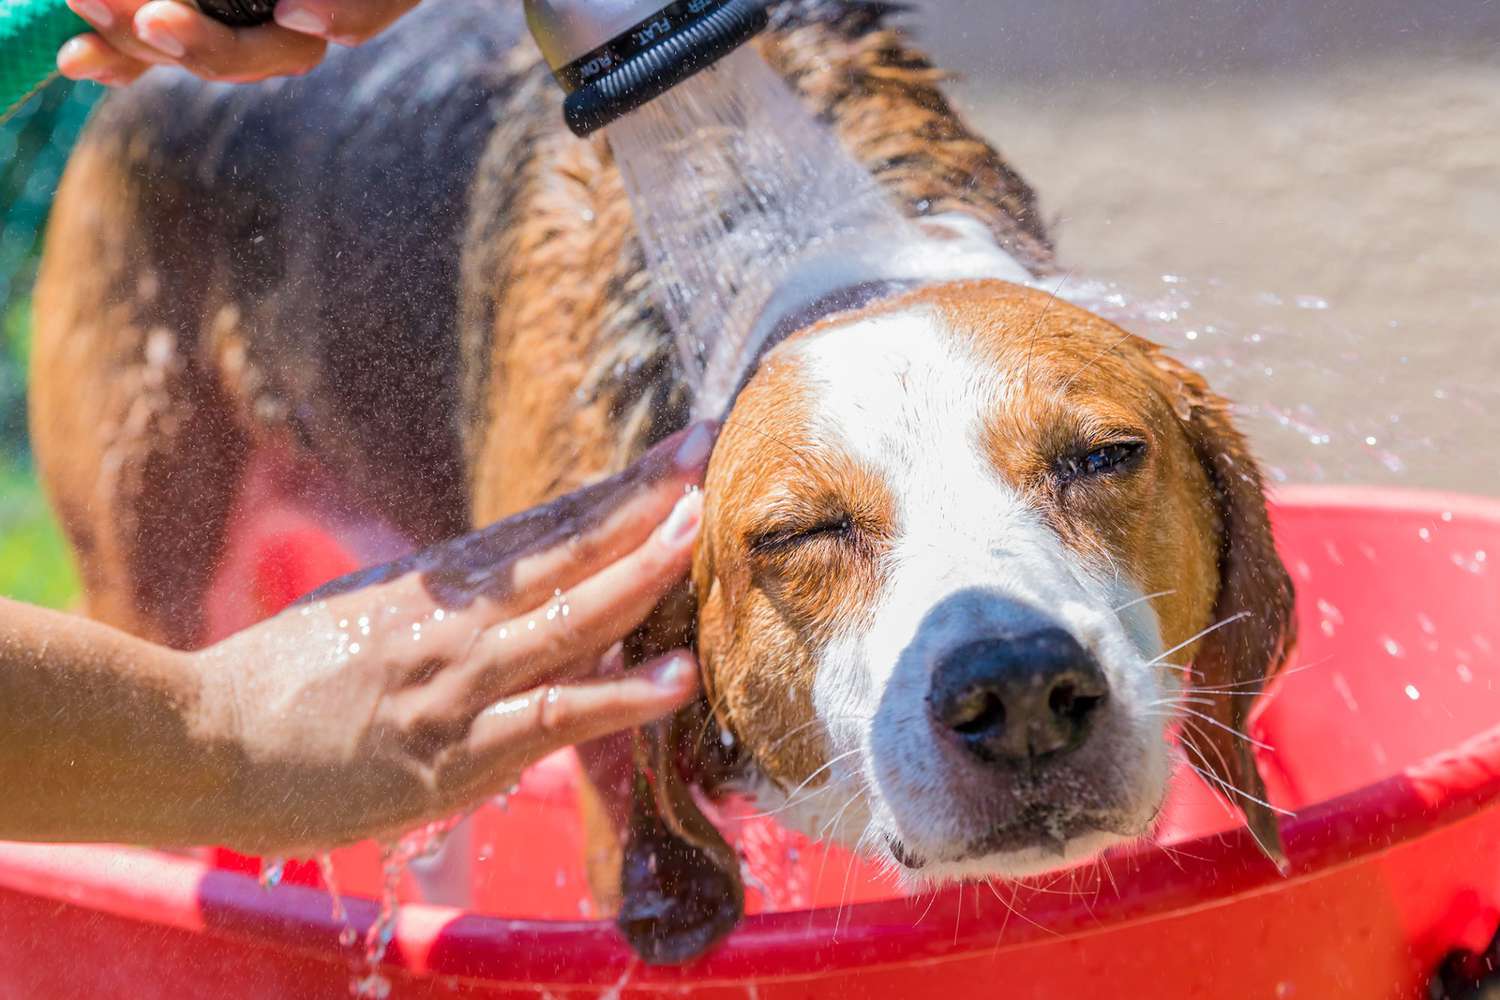 spraying dog with a hose in a kiddie pool; preventing dog heat rash